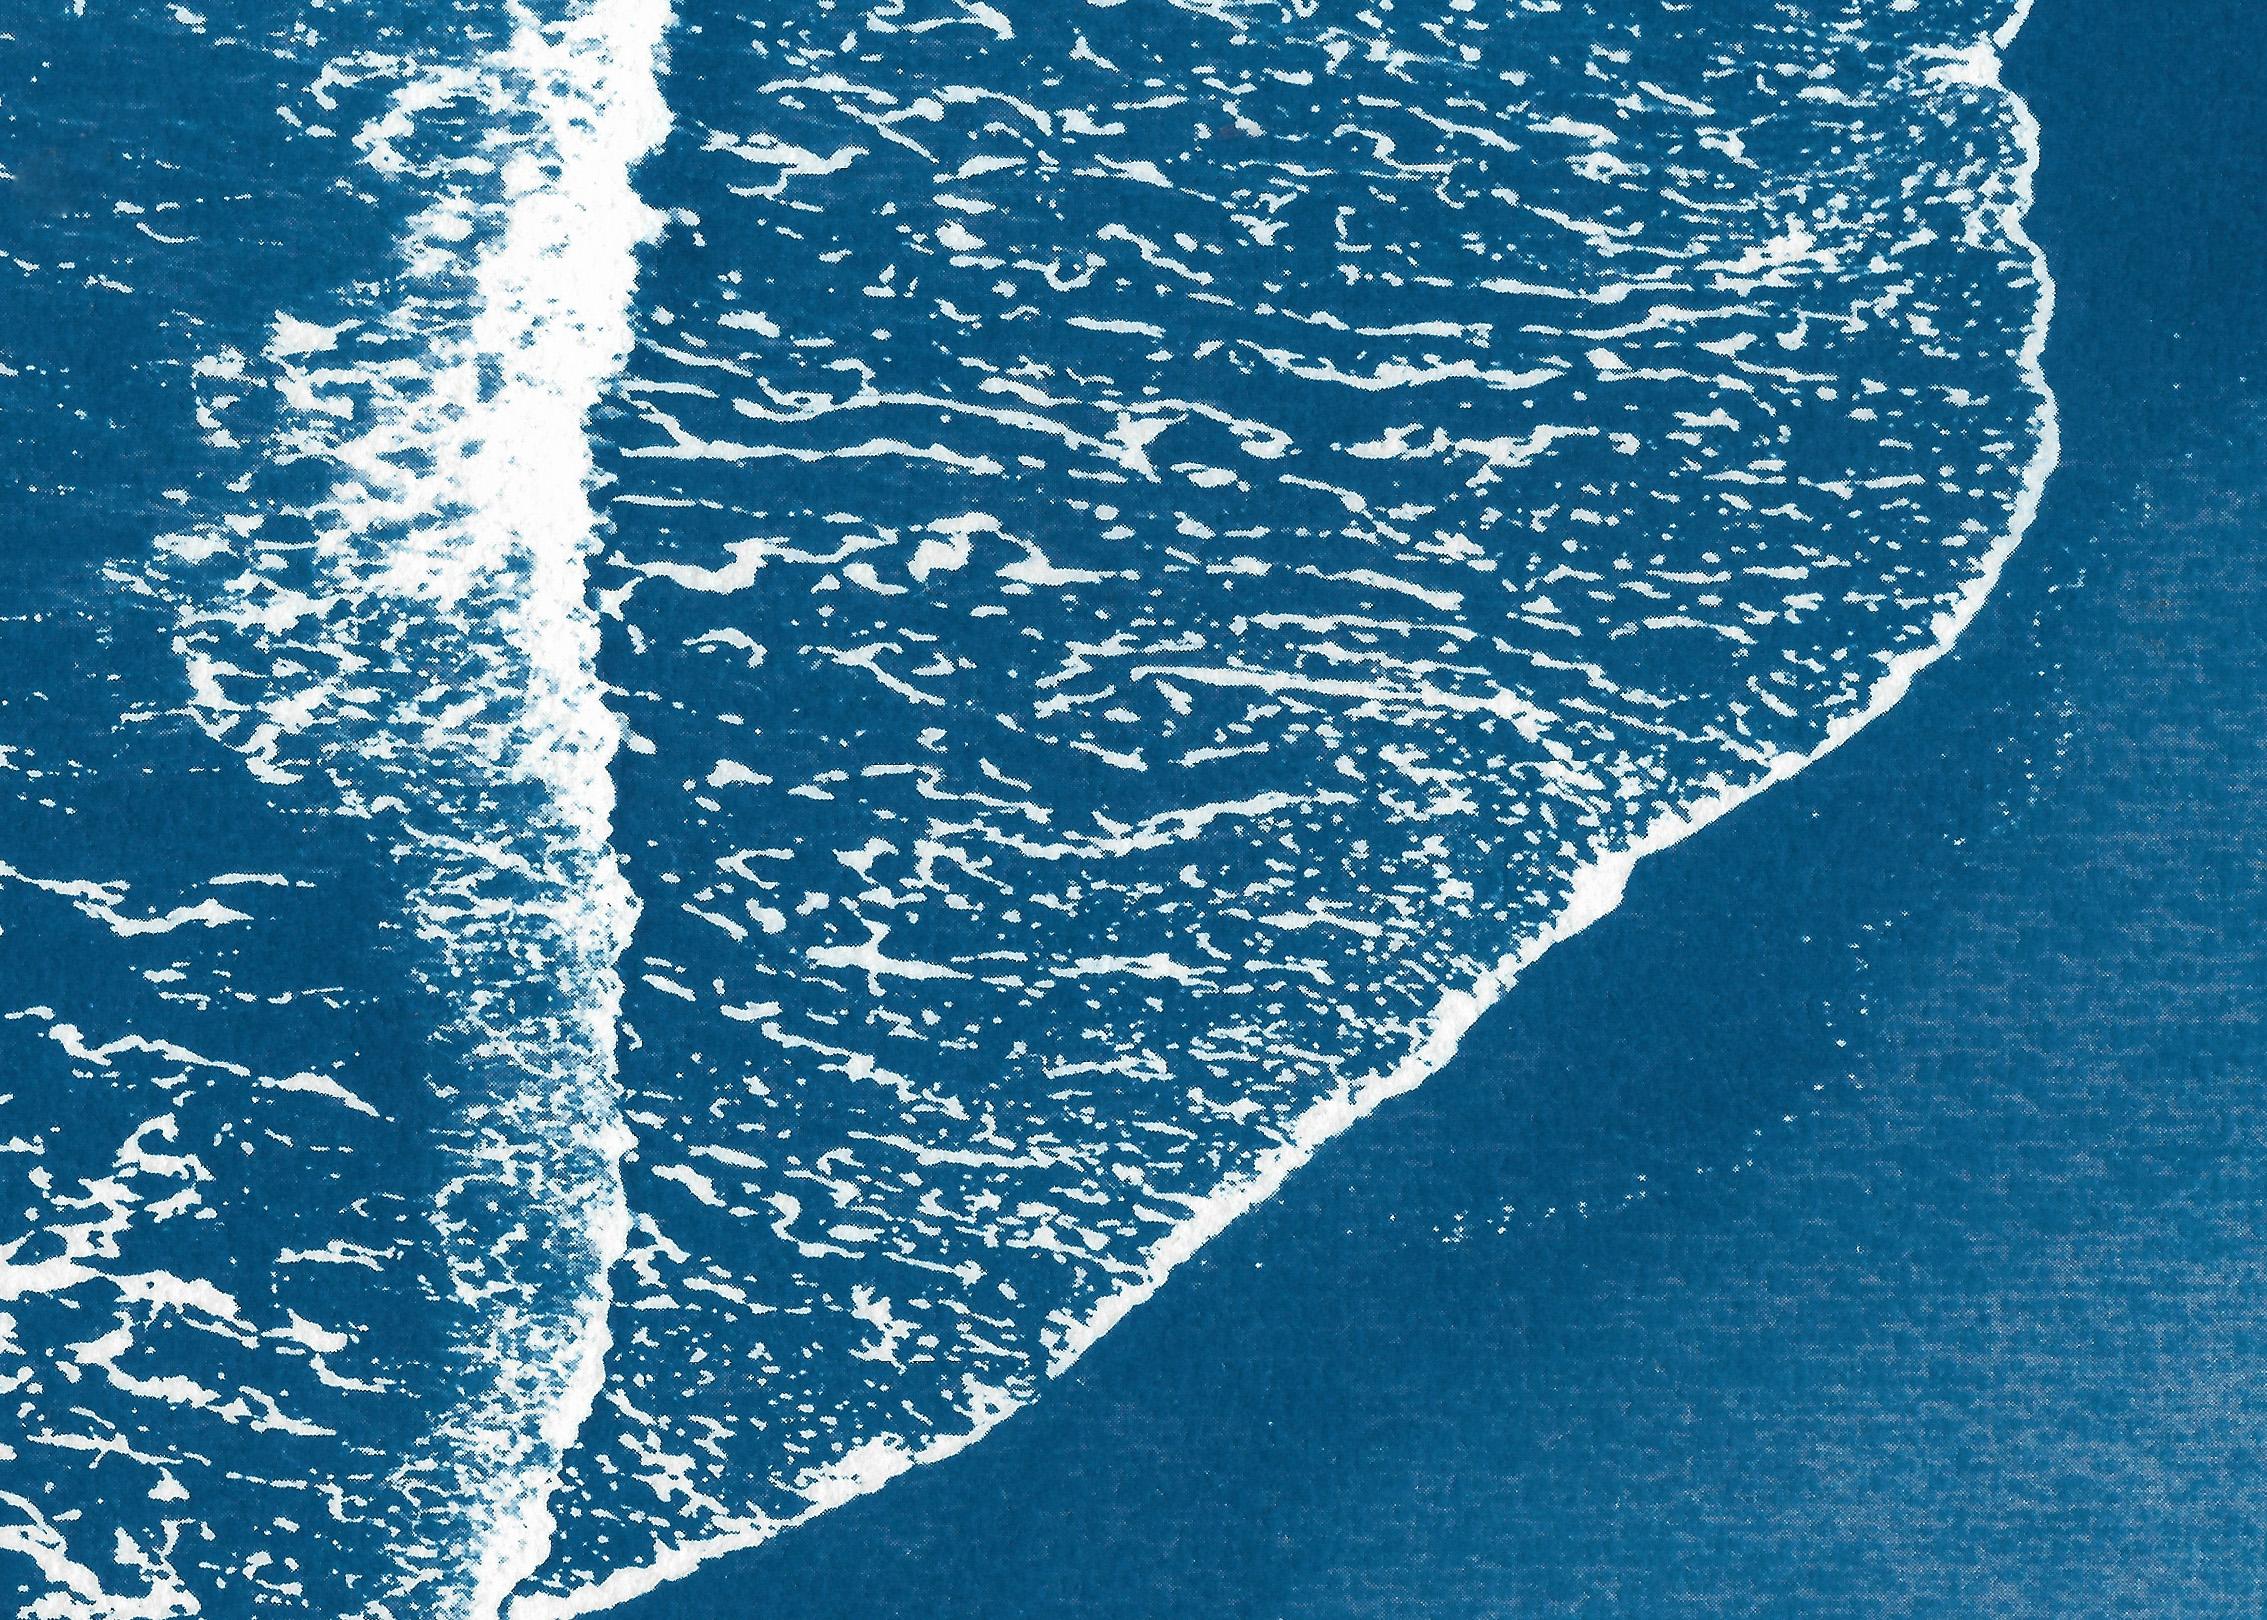 Blue Pacific Foamy Shorelines, Calm Seascape Handmade Cyanotype Waterolor Paper  - Minimalist Painting by Kind of Cyan